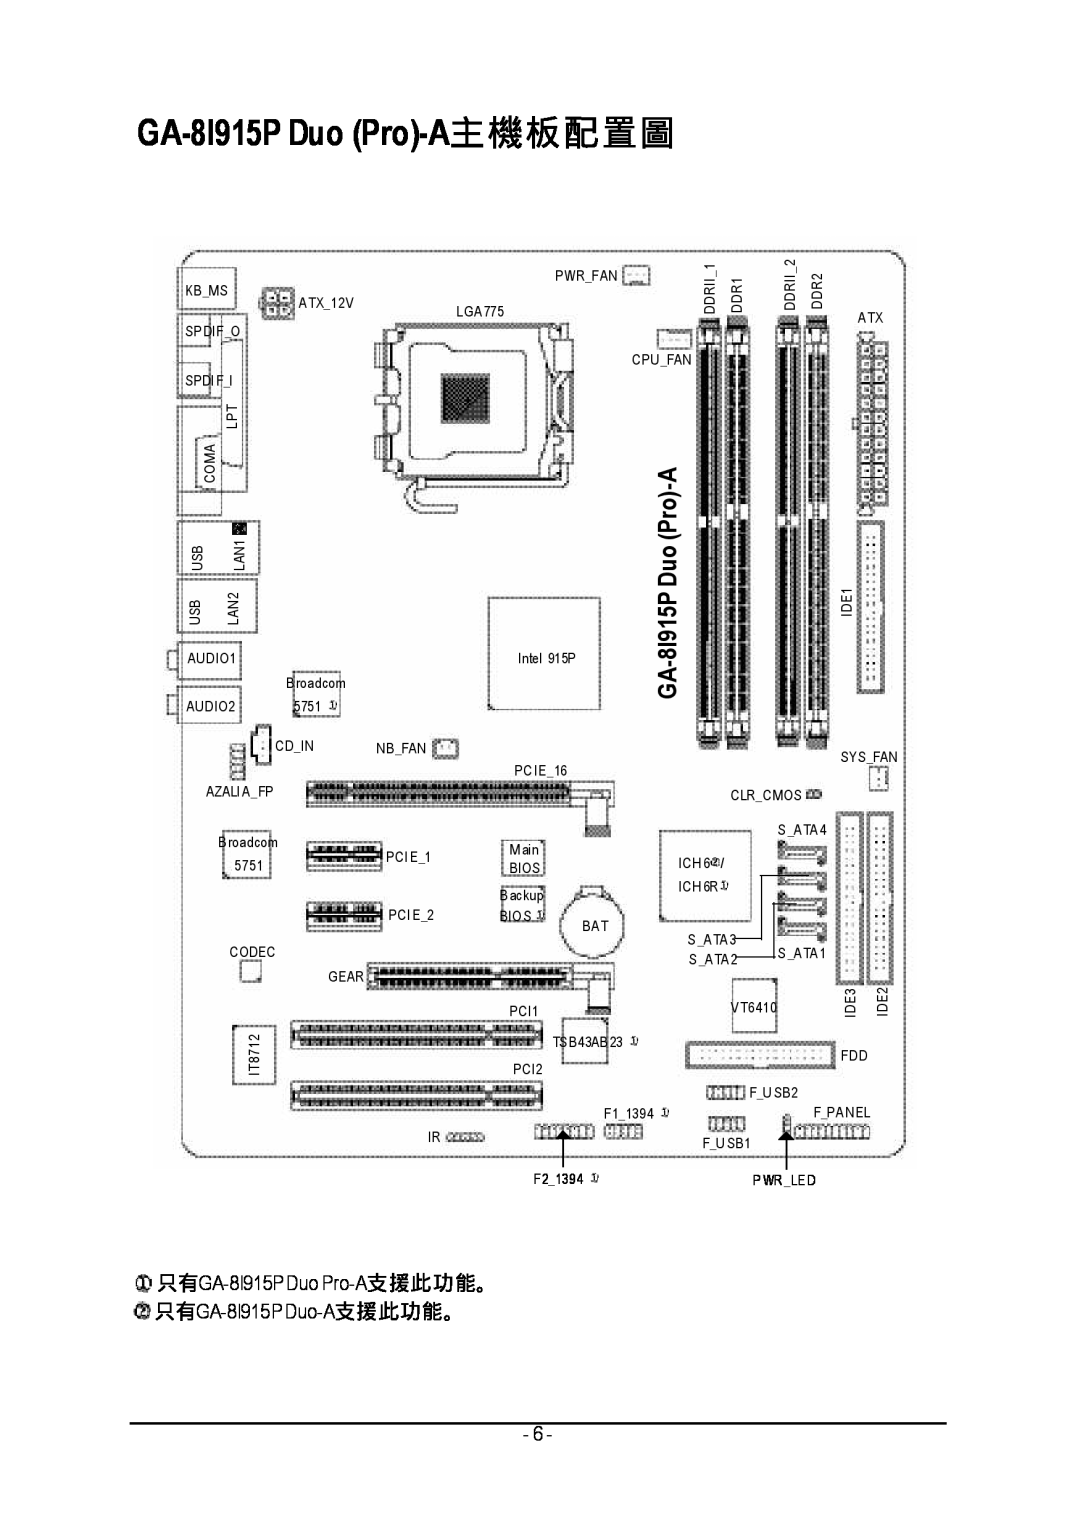 Gigabyte manual GA-8I915P Duo Pro-A, IDE1 